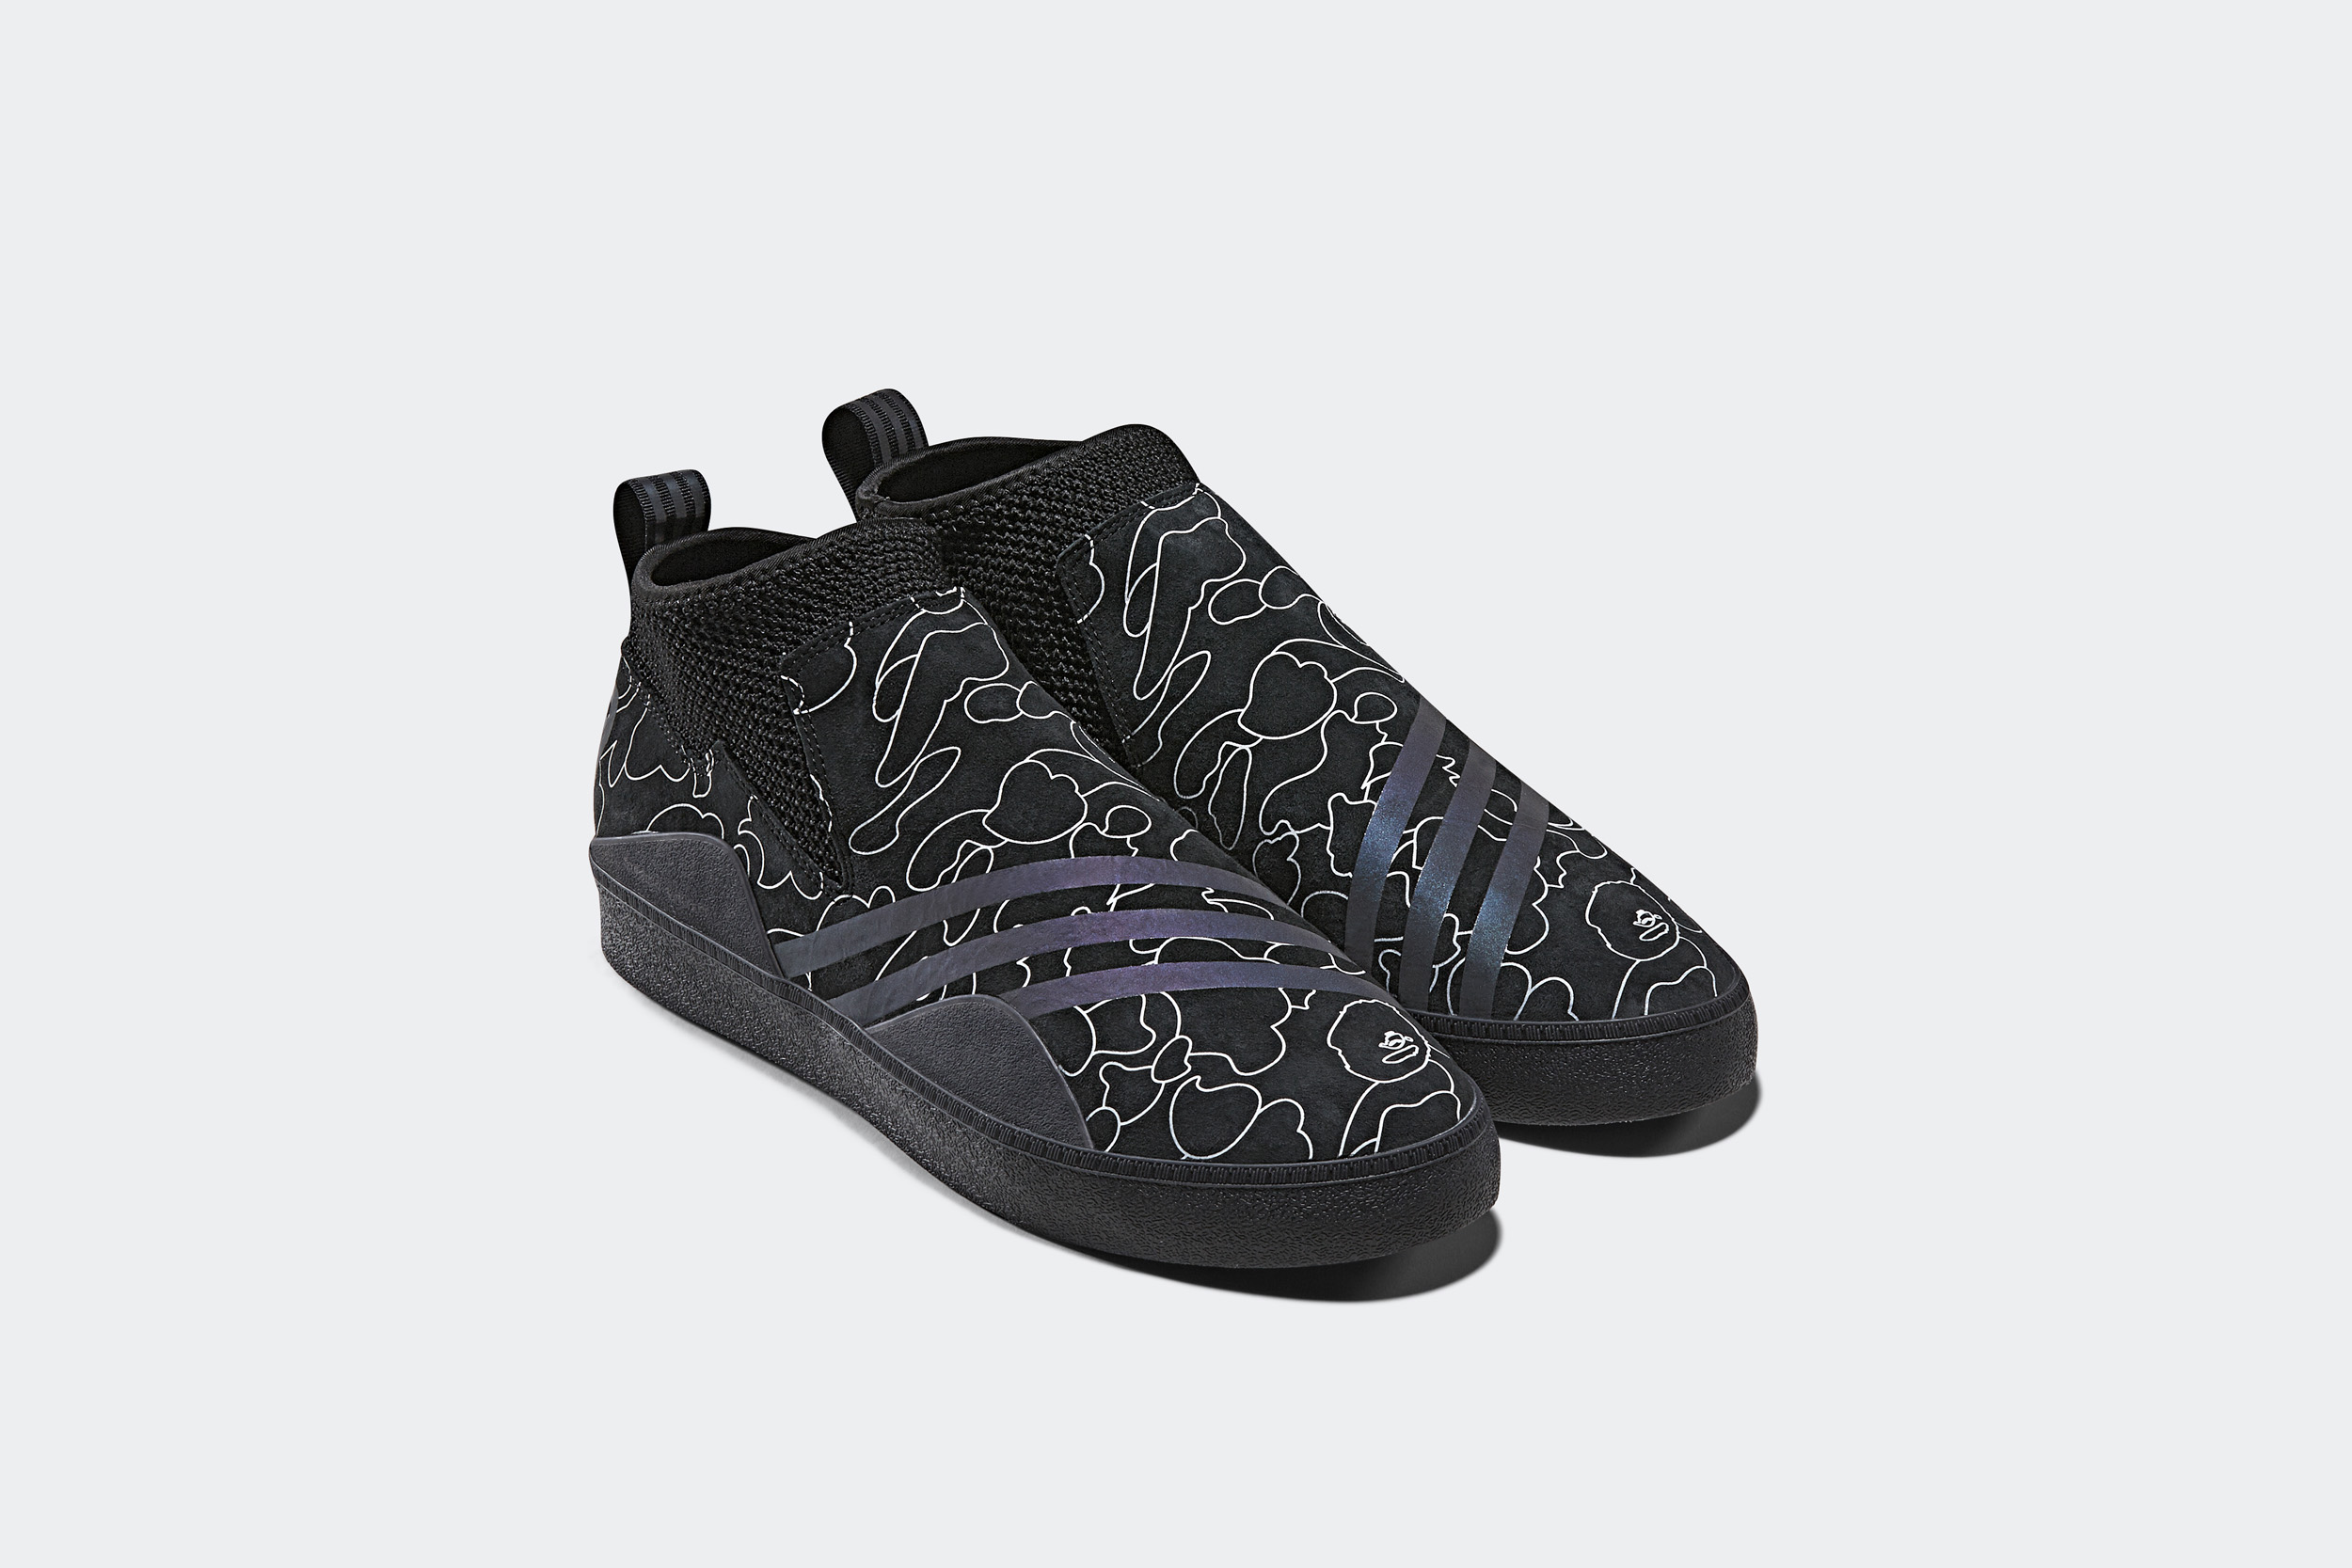 adidas x BAPE 3ST.002 - DB3003 - Black - Footshop - Releases